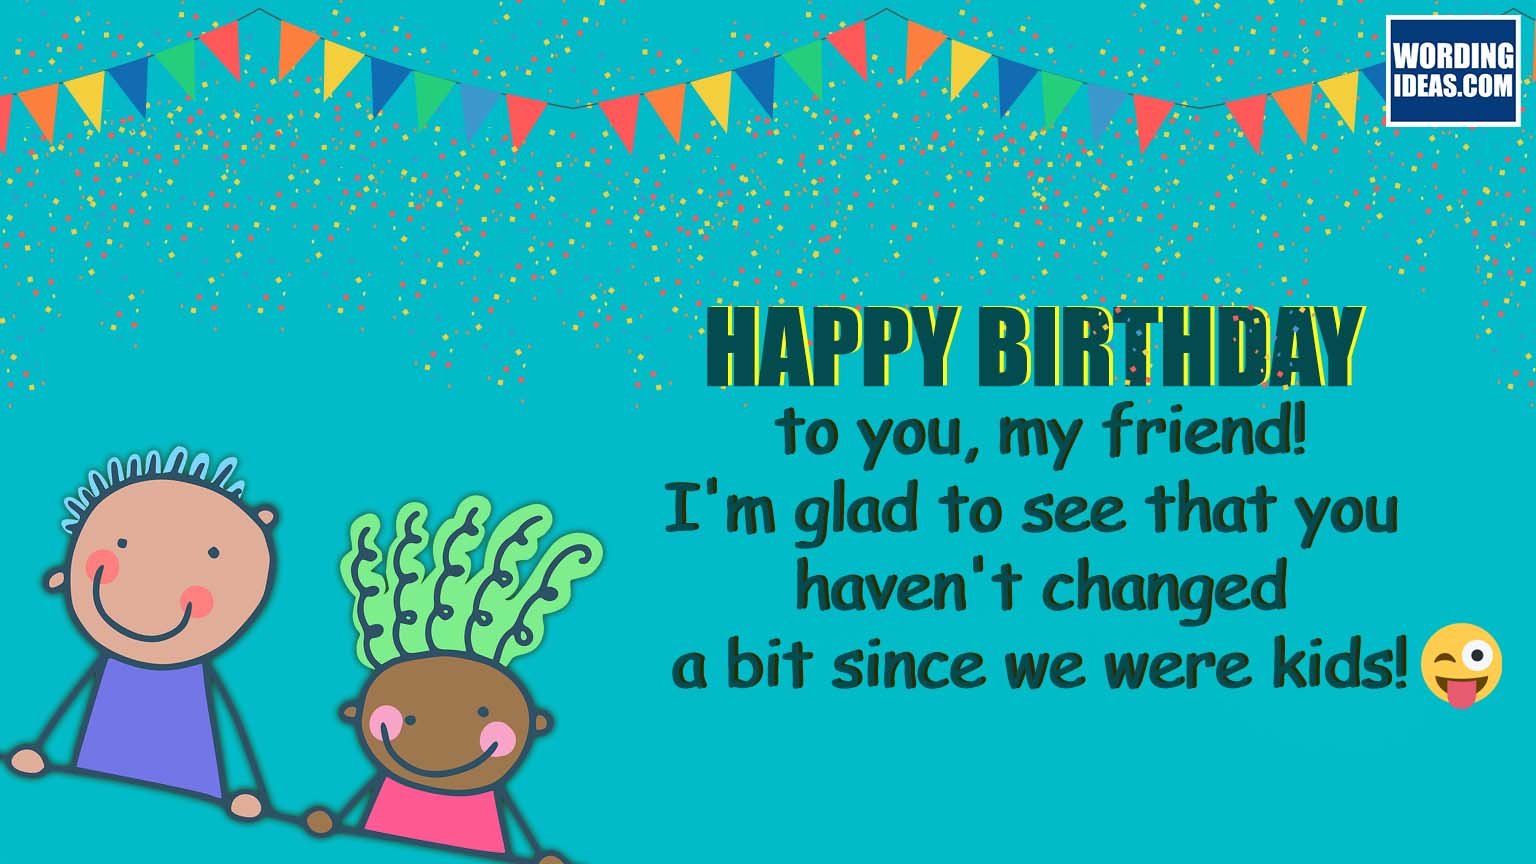 30-birthday-wishes-for-a-best-friend-wording-ideas